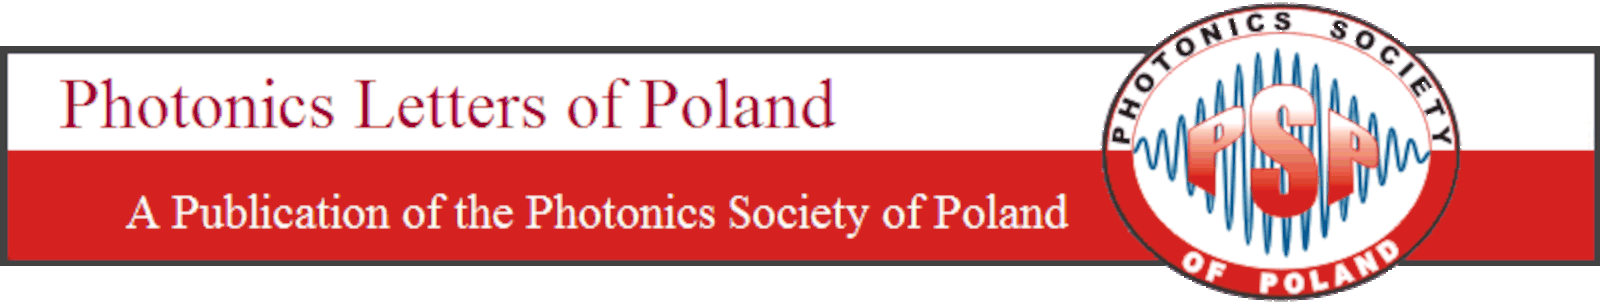 Photonics Letters of Poland logo